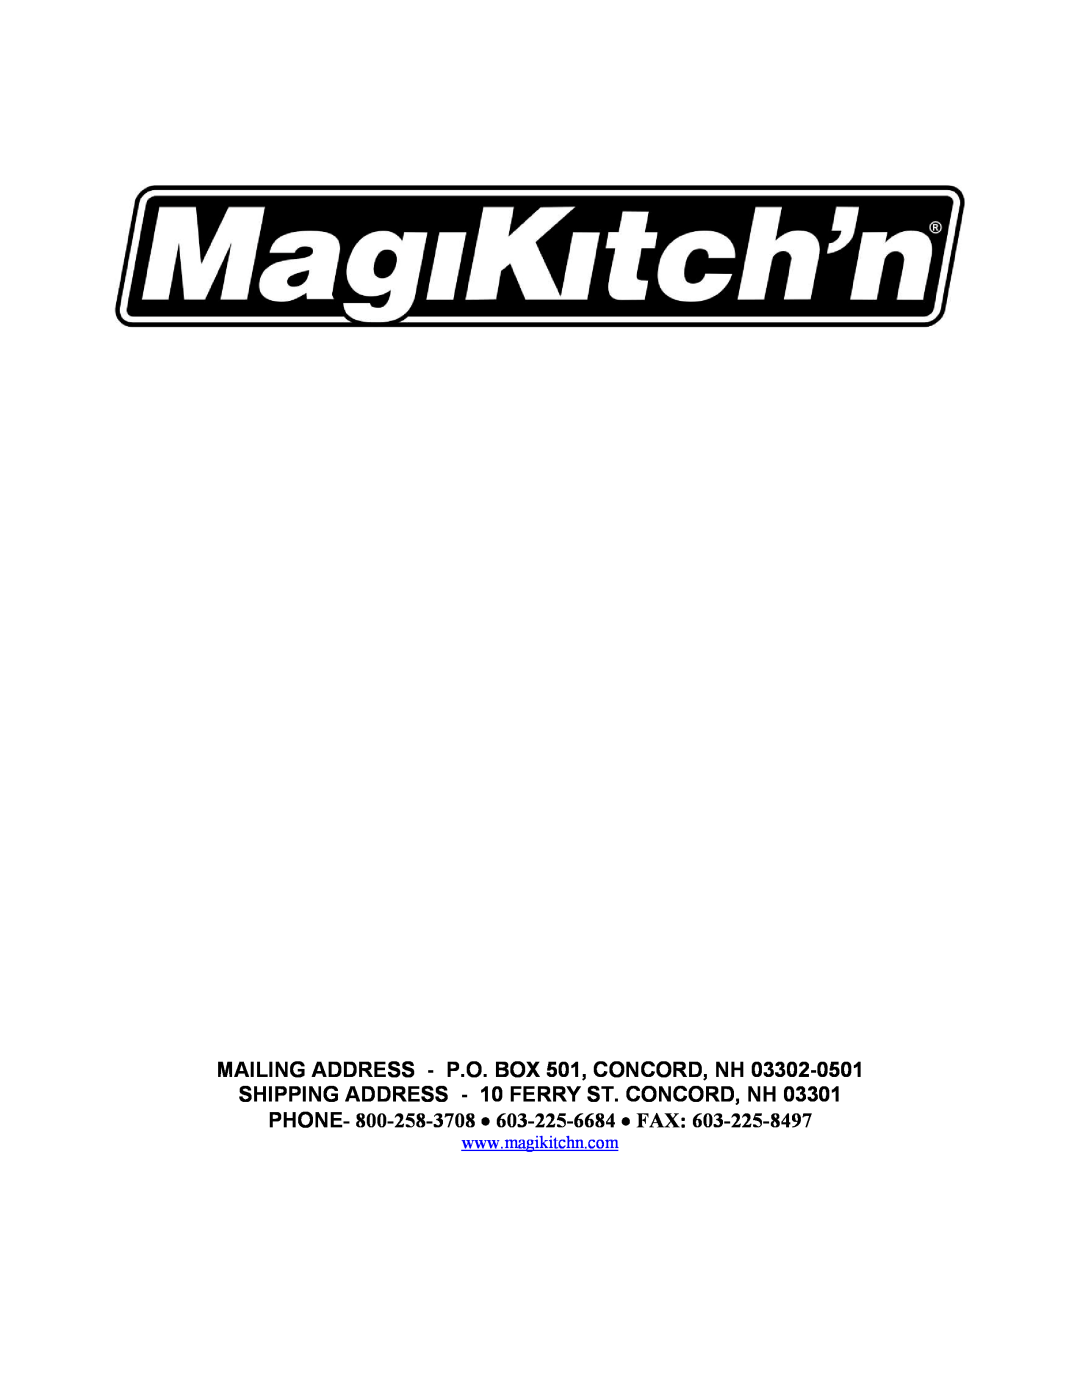 Magikitch'n pmn operation manual 